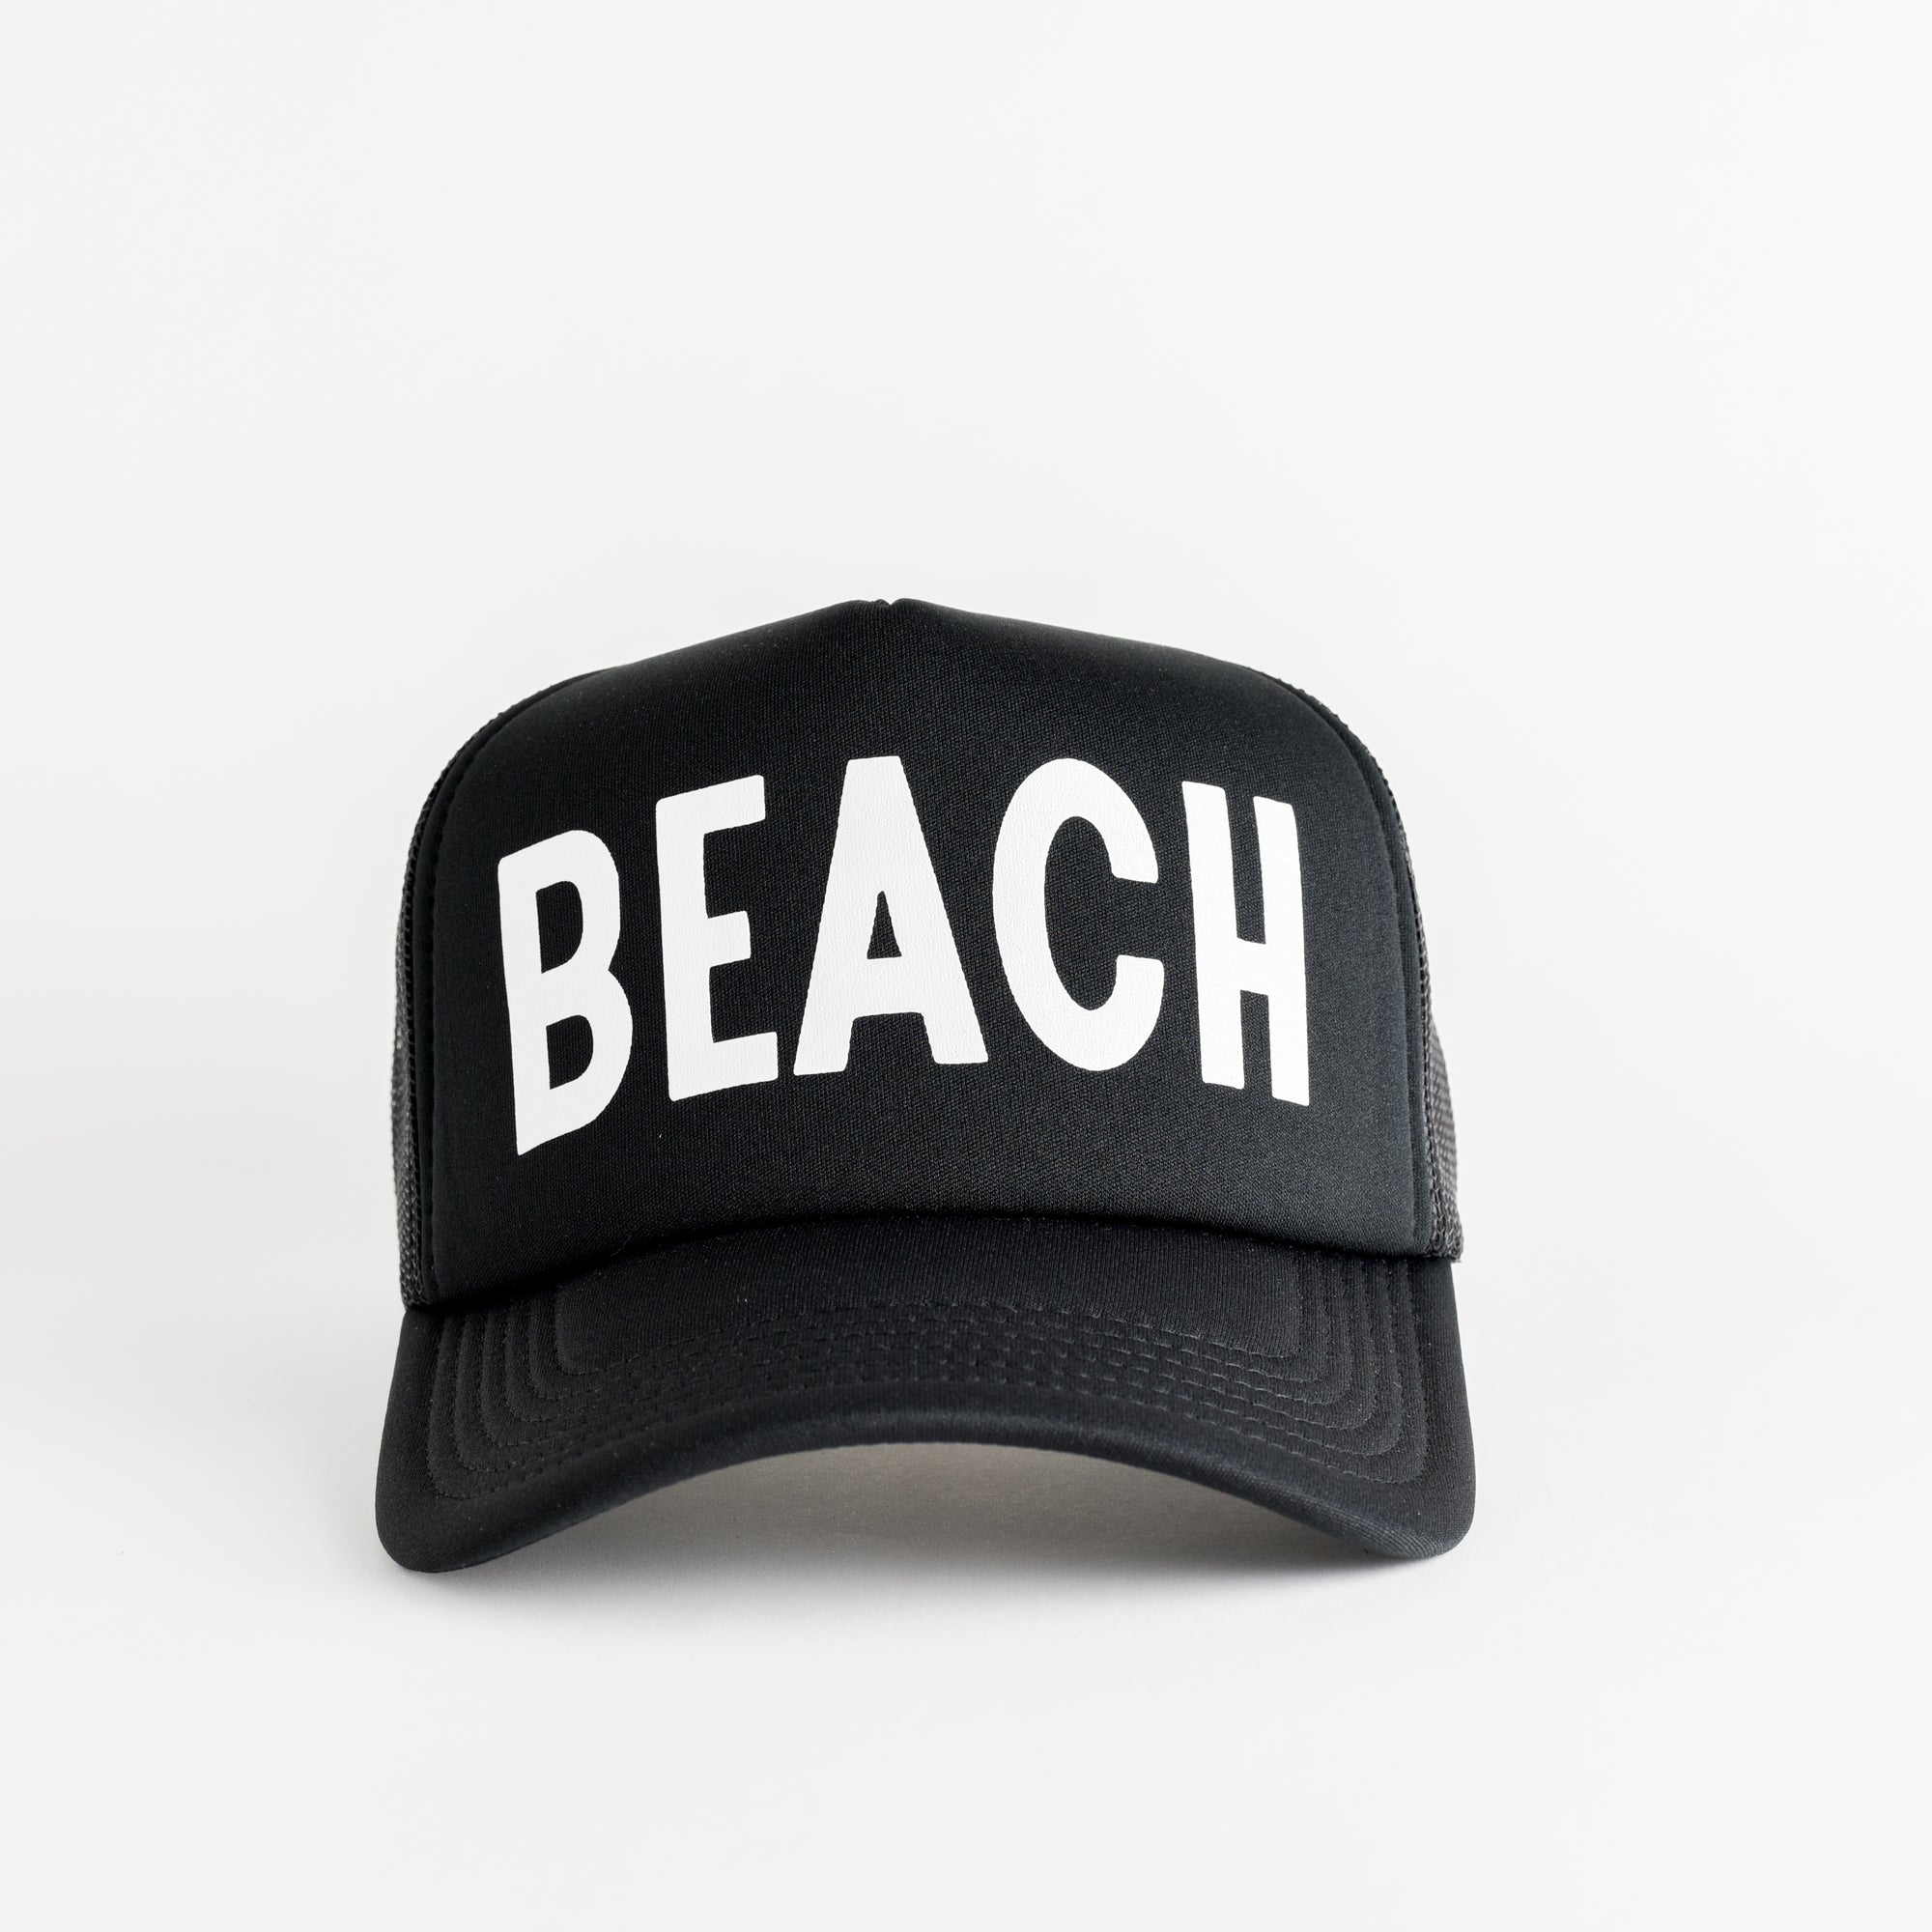 Beach Recycled Trucker Hat - black